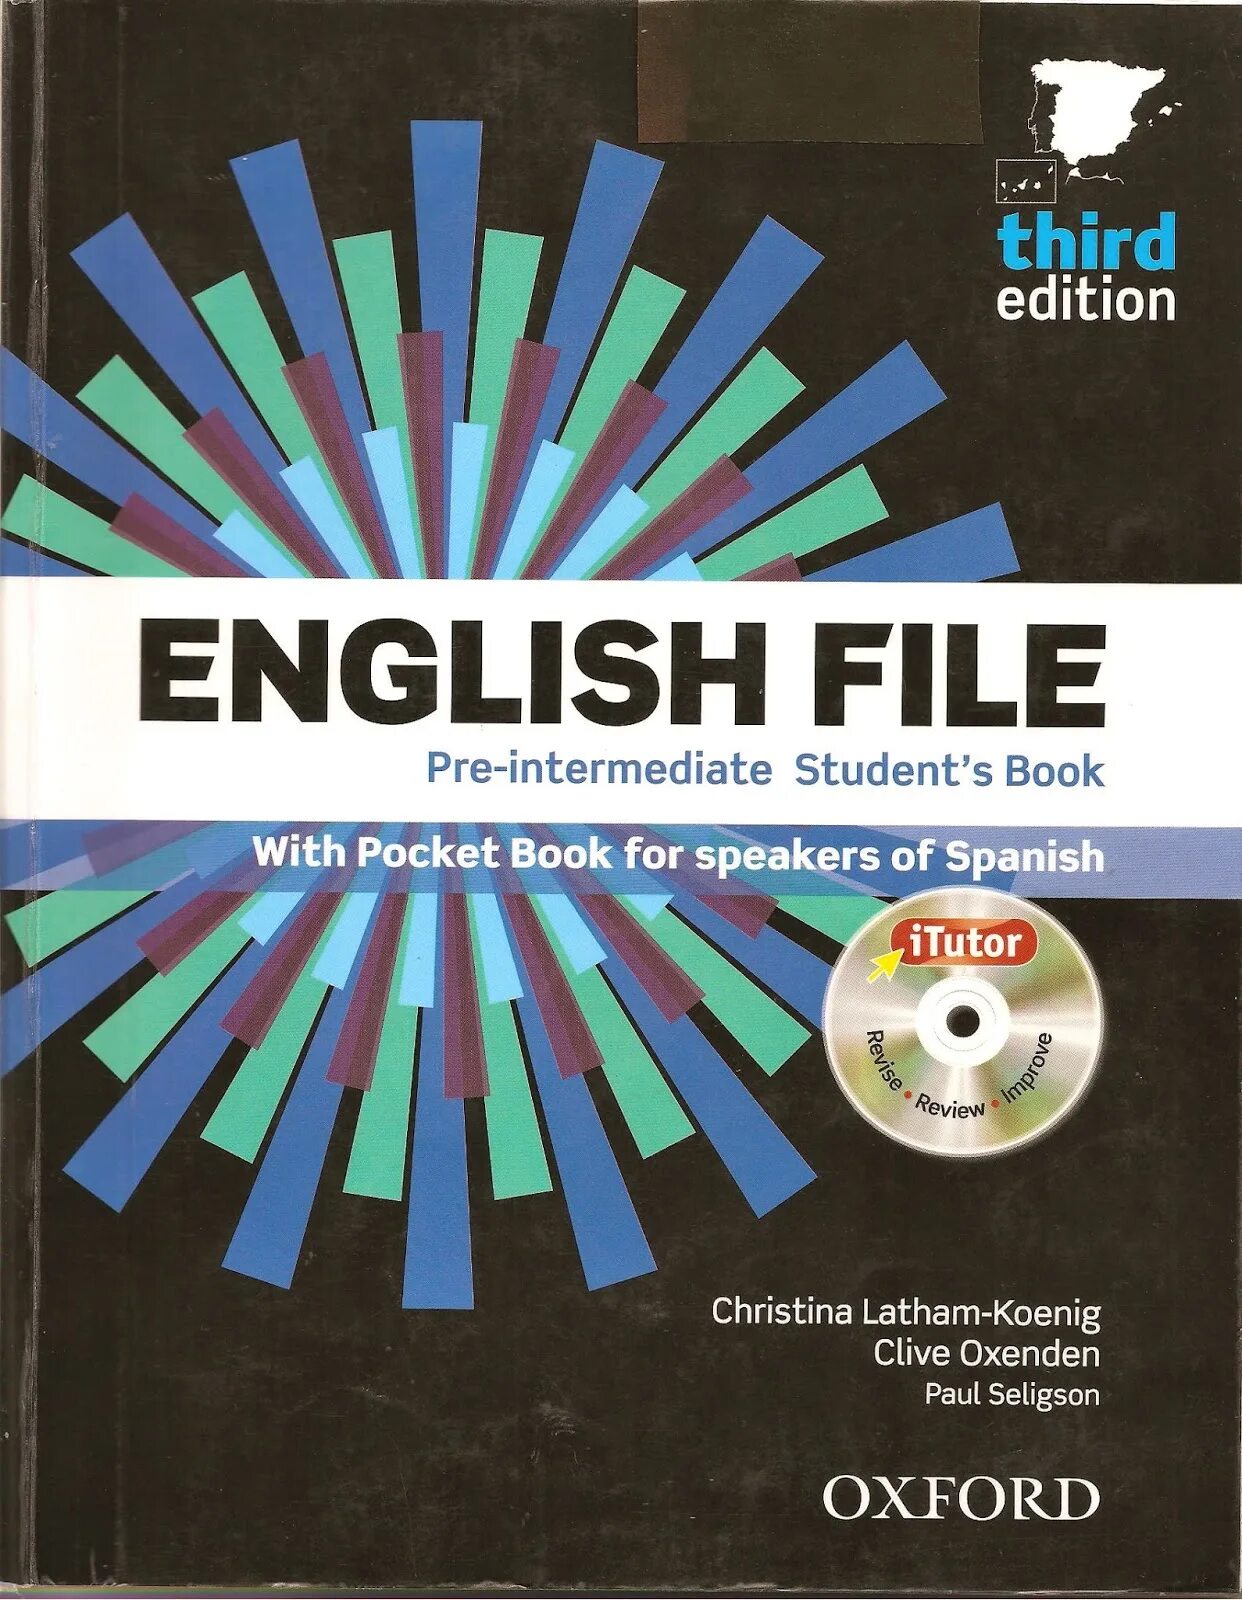 EF pre Intermediate 3rd Edition. English file 3 издание pre-Intermediate. English file pre Intermediate 5 издание. English pre Intermediate 3rd Edition.